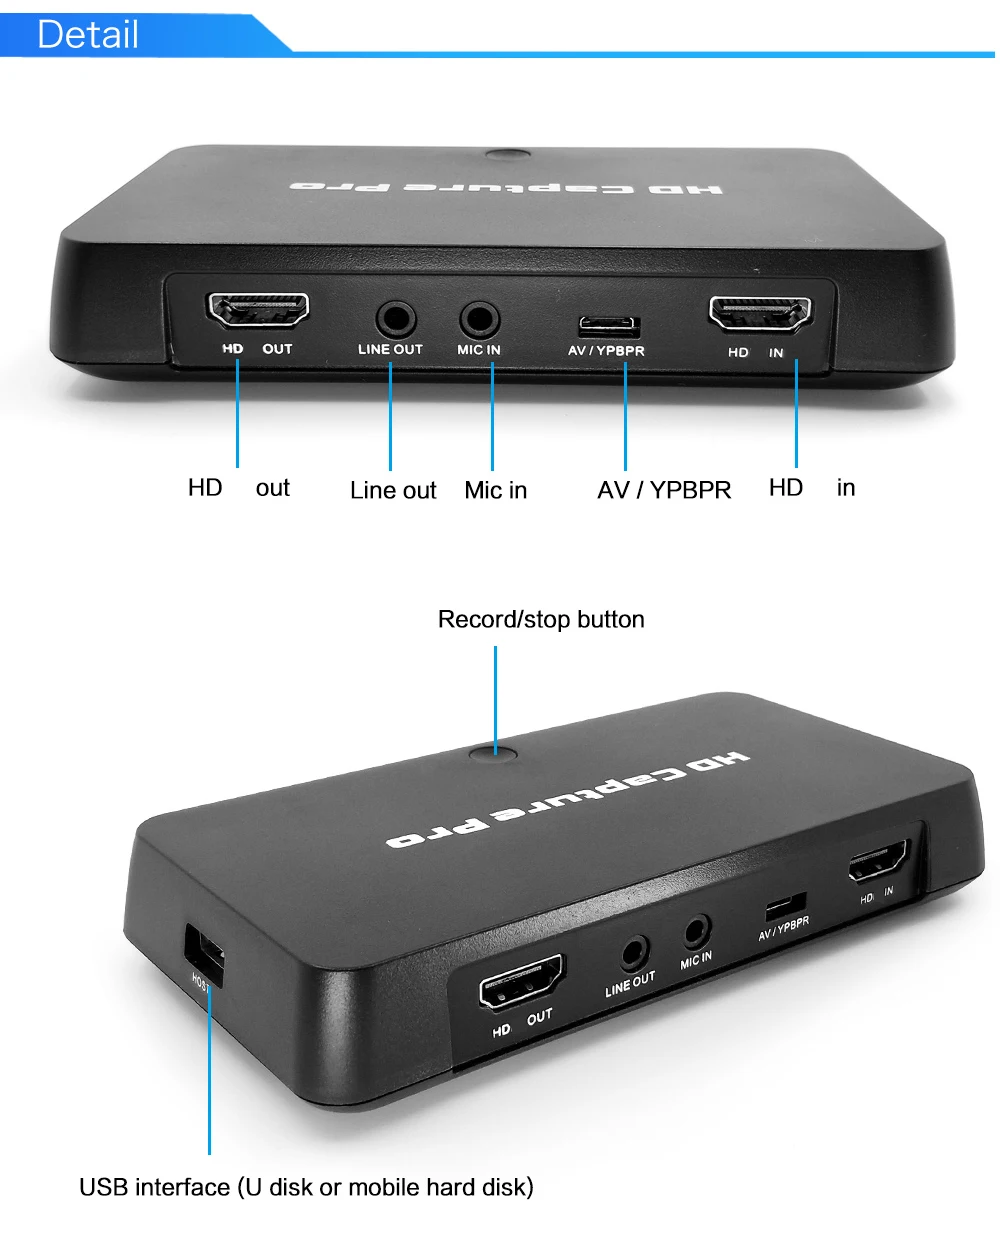 Ezcap295 1080P HD Video Game Capture OBS Live HD Recorder USB 2.0 pentru Redare Carduri de Captura Pentru Xbox 360, Xbox One PS4 Set-Top Box 3